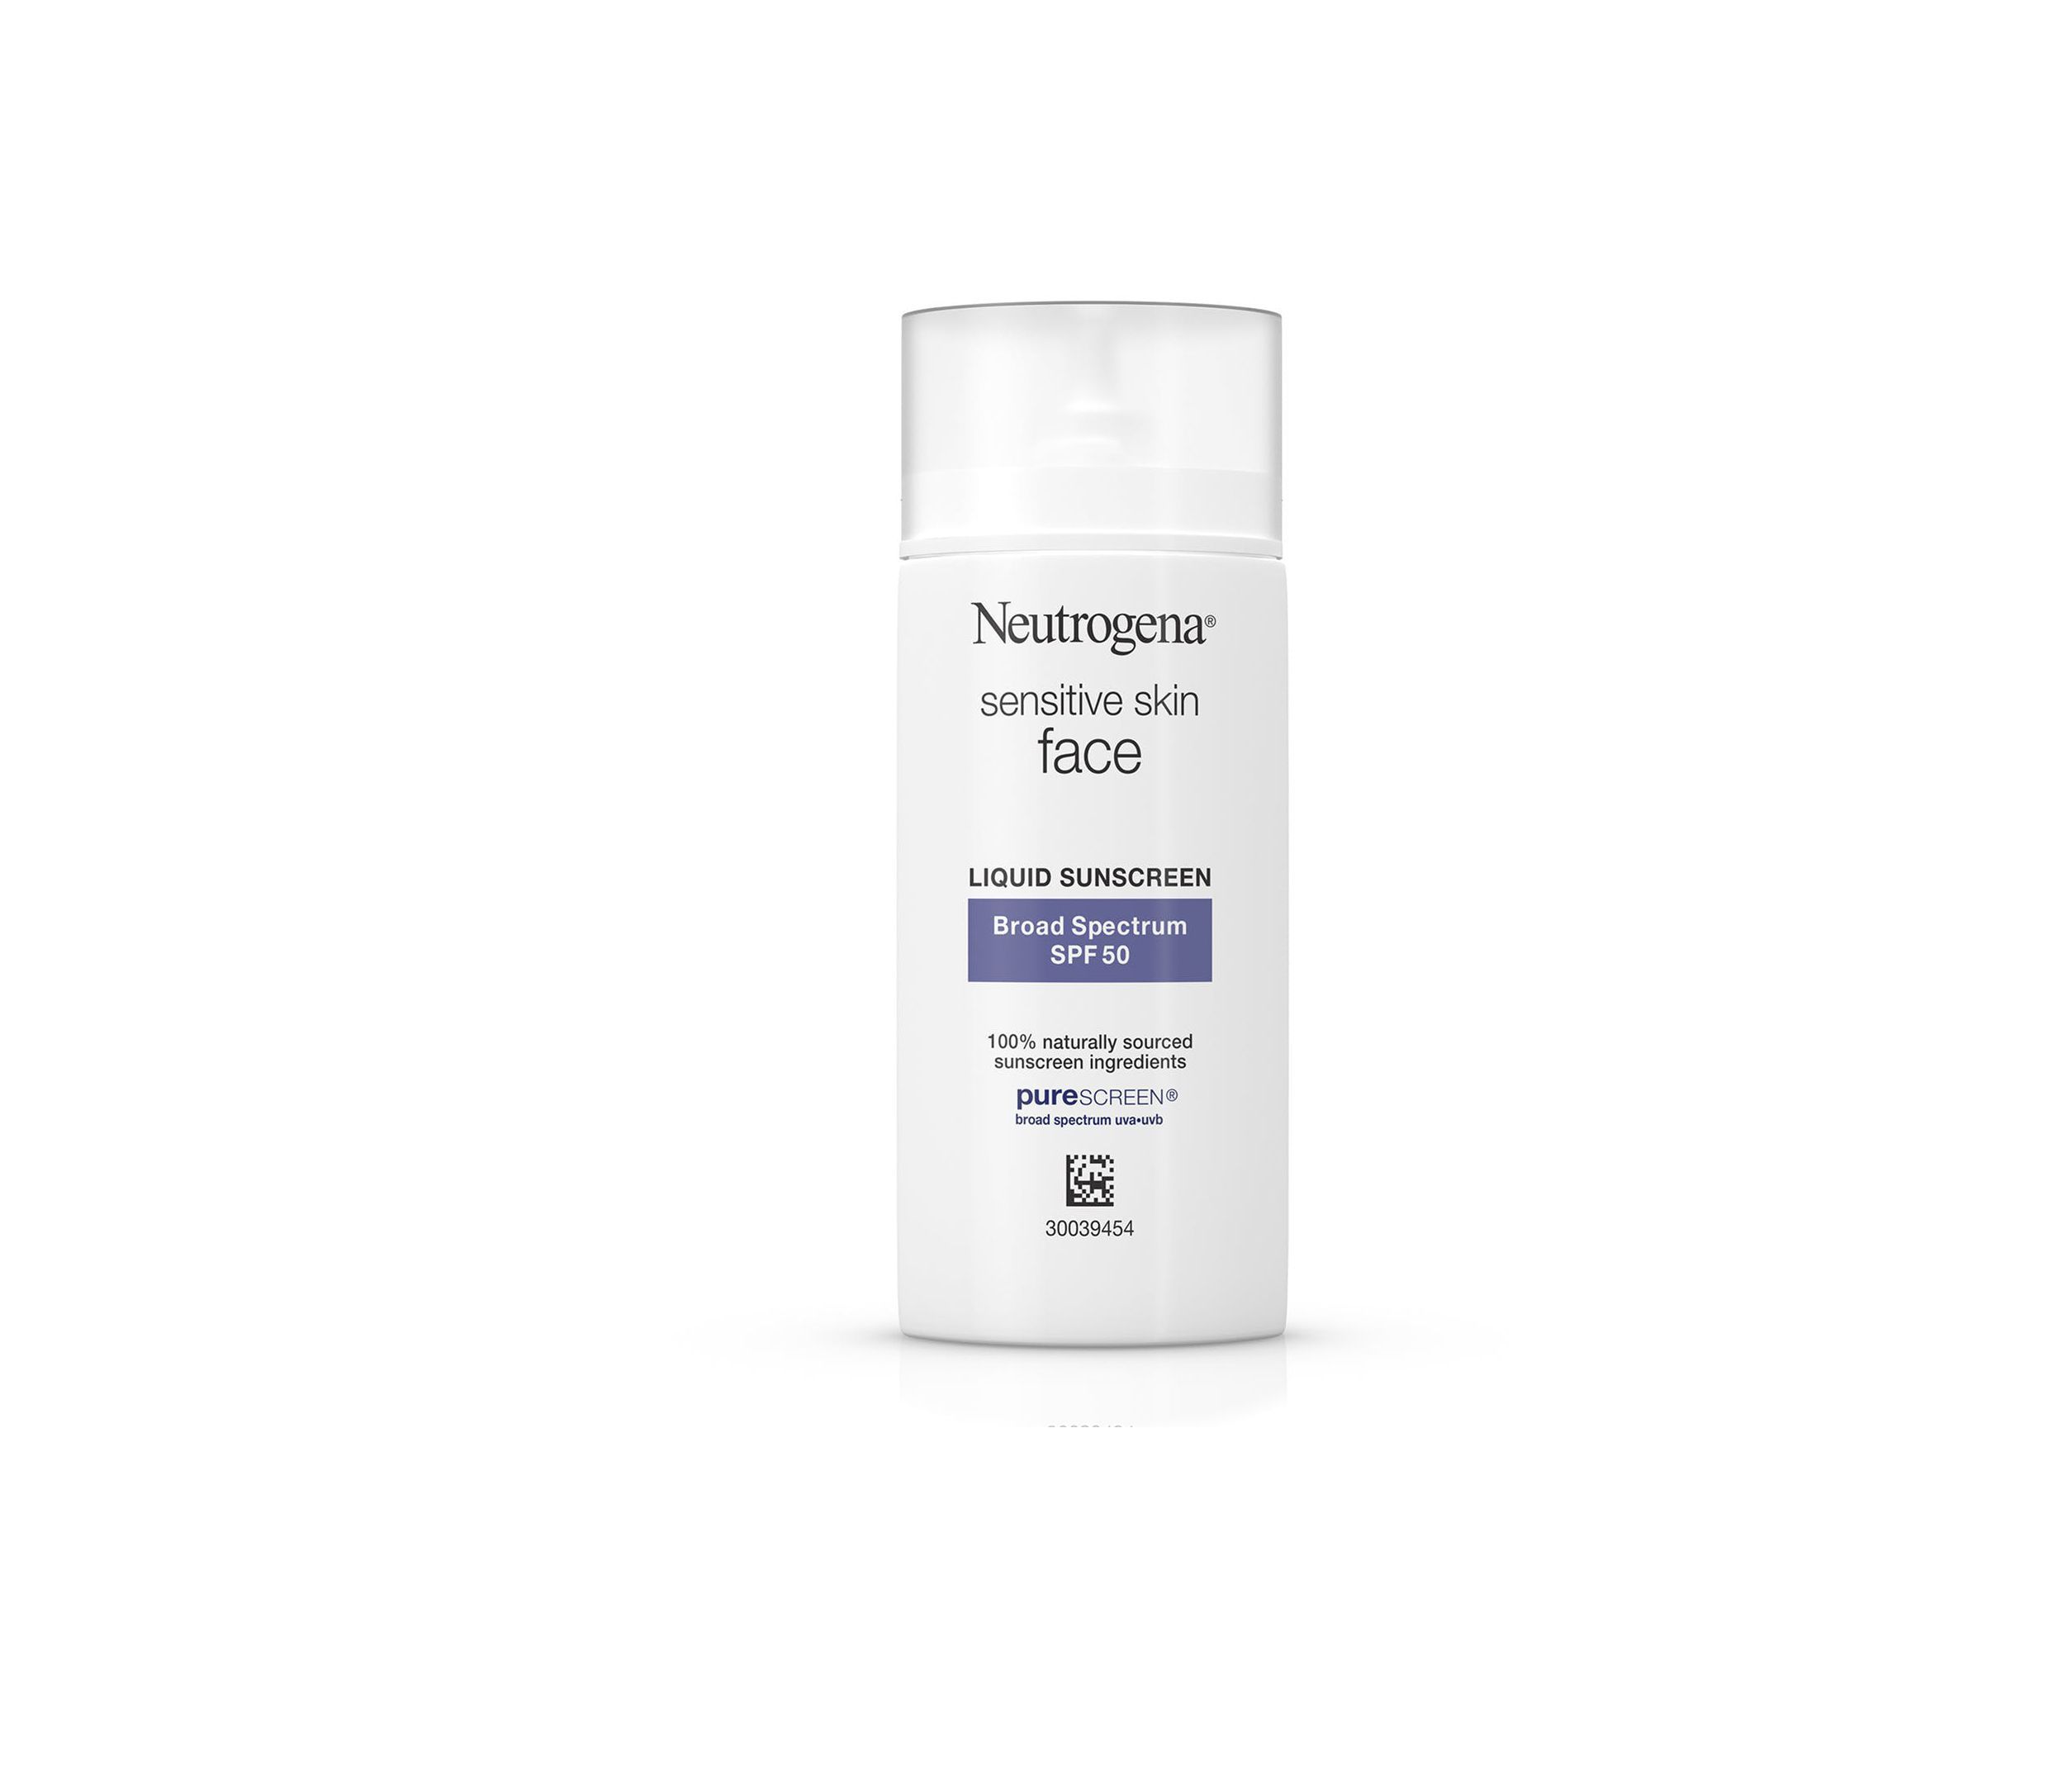 Neutrogena Sensitive Skin Face Liquid Sunscreen Broad Spectrum SPF 50